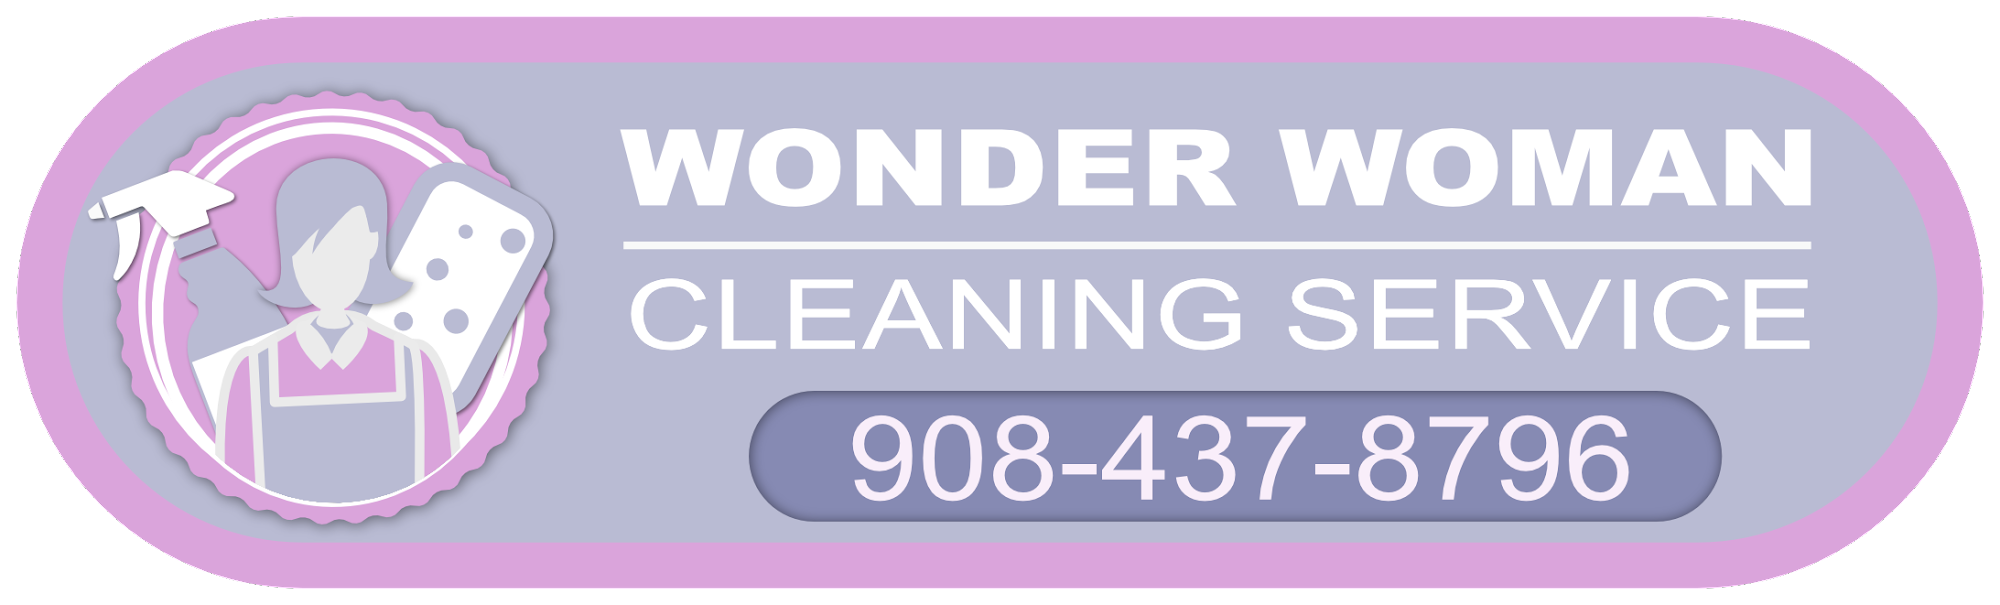 WonderWoman Cleaning Service LLC